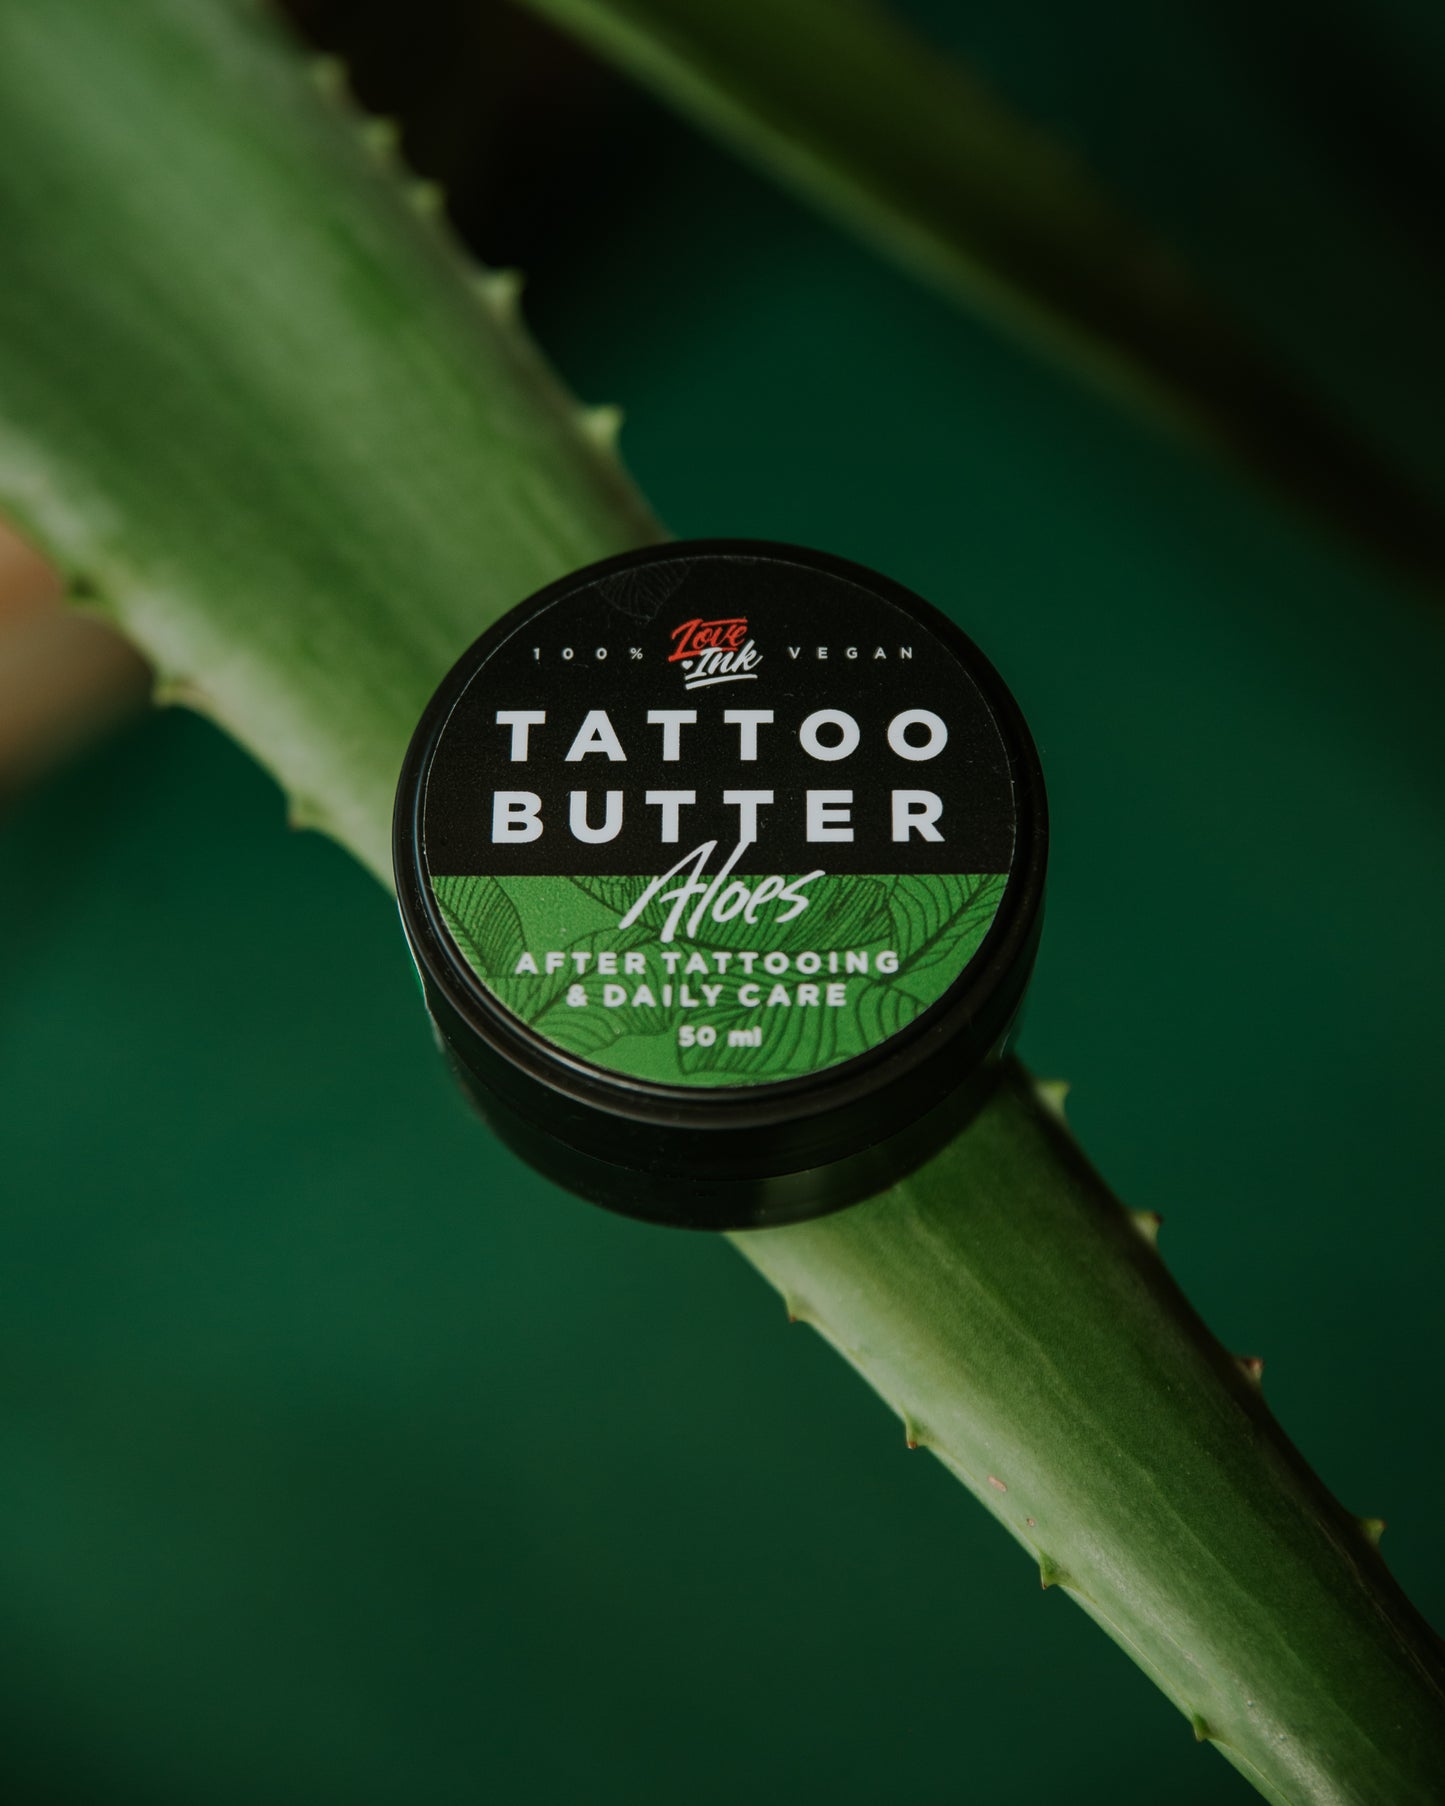 Tattoo Butter Aloe 50ml NEW PACKAGE